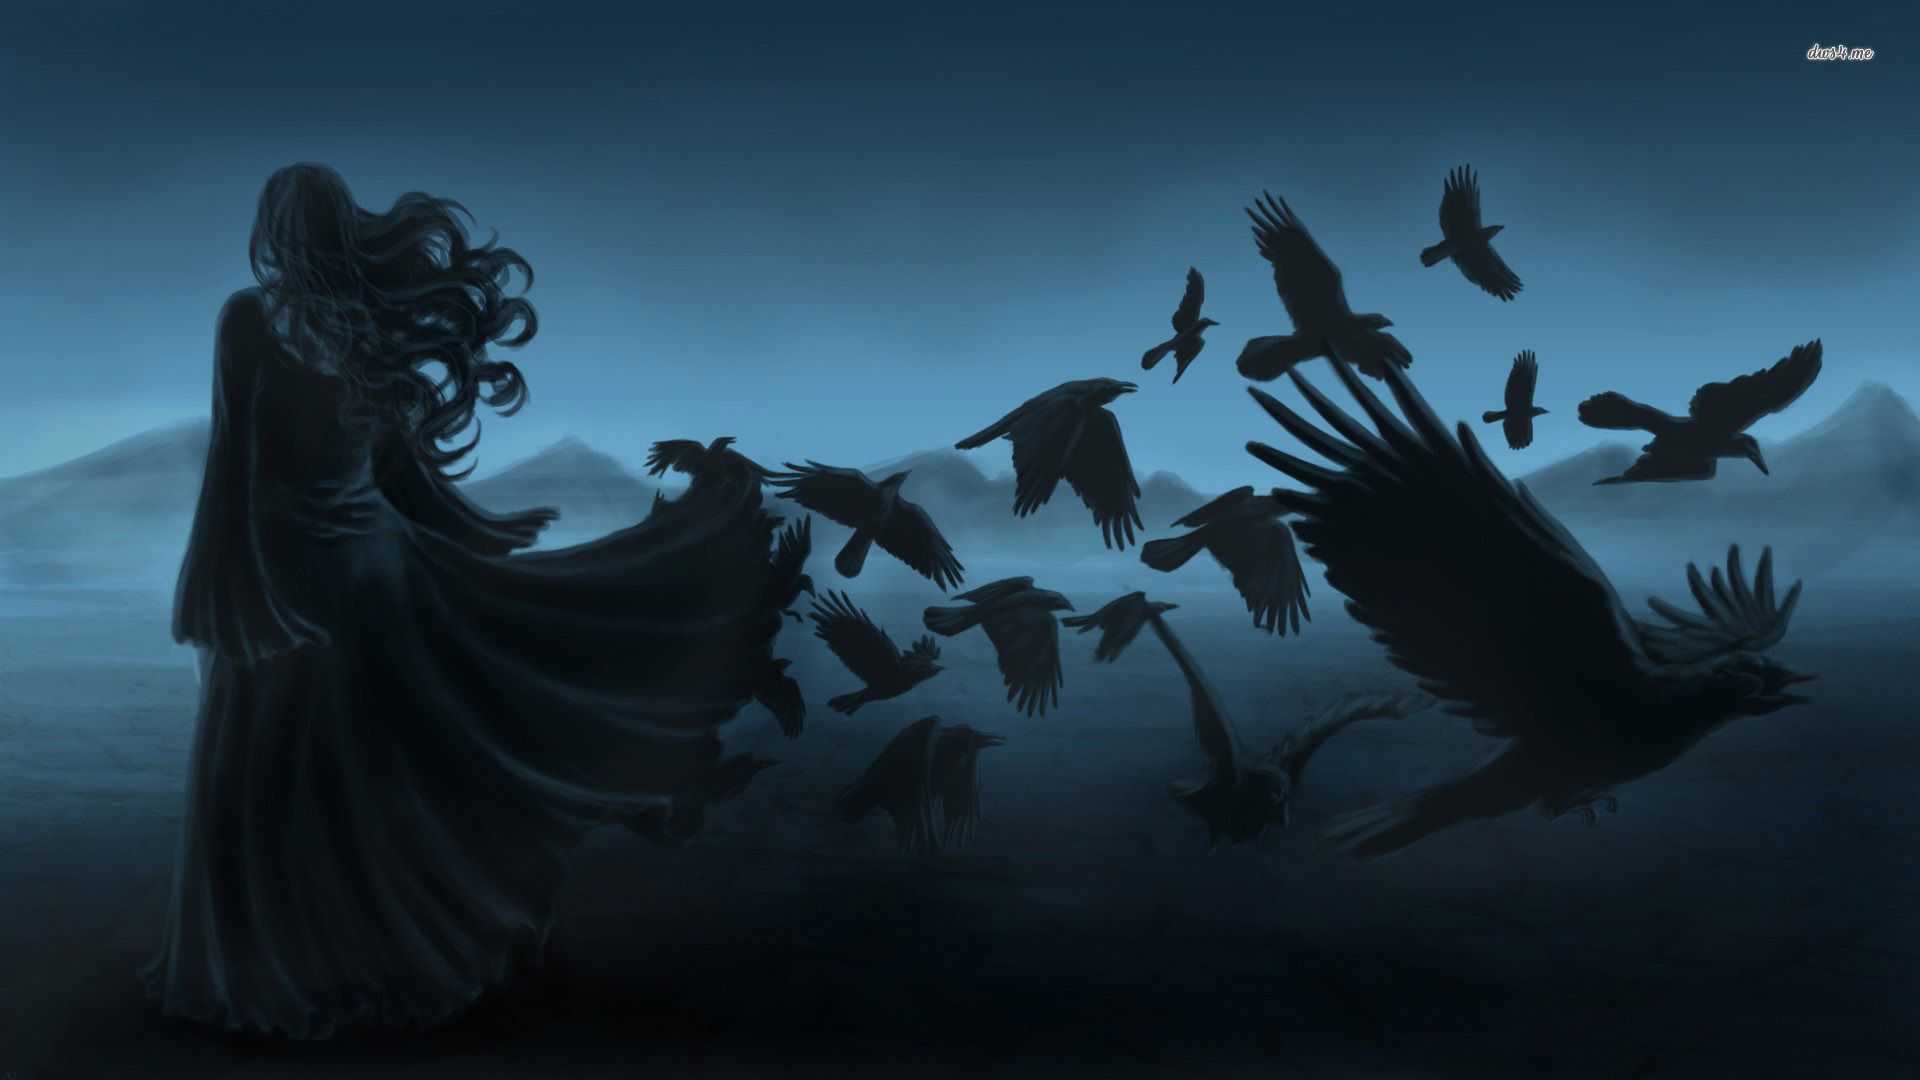 Free download Ravens in the dark wallpaper 1280x800 Ravens in